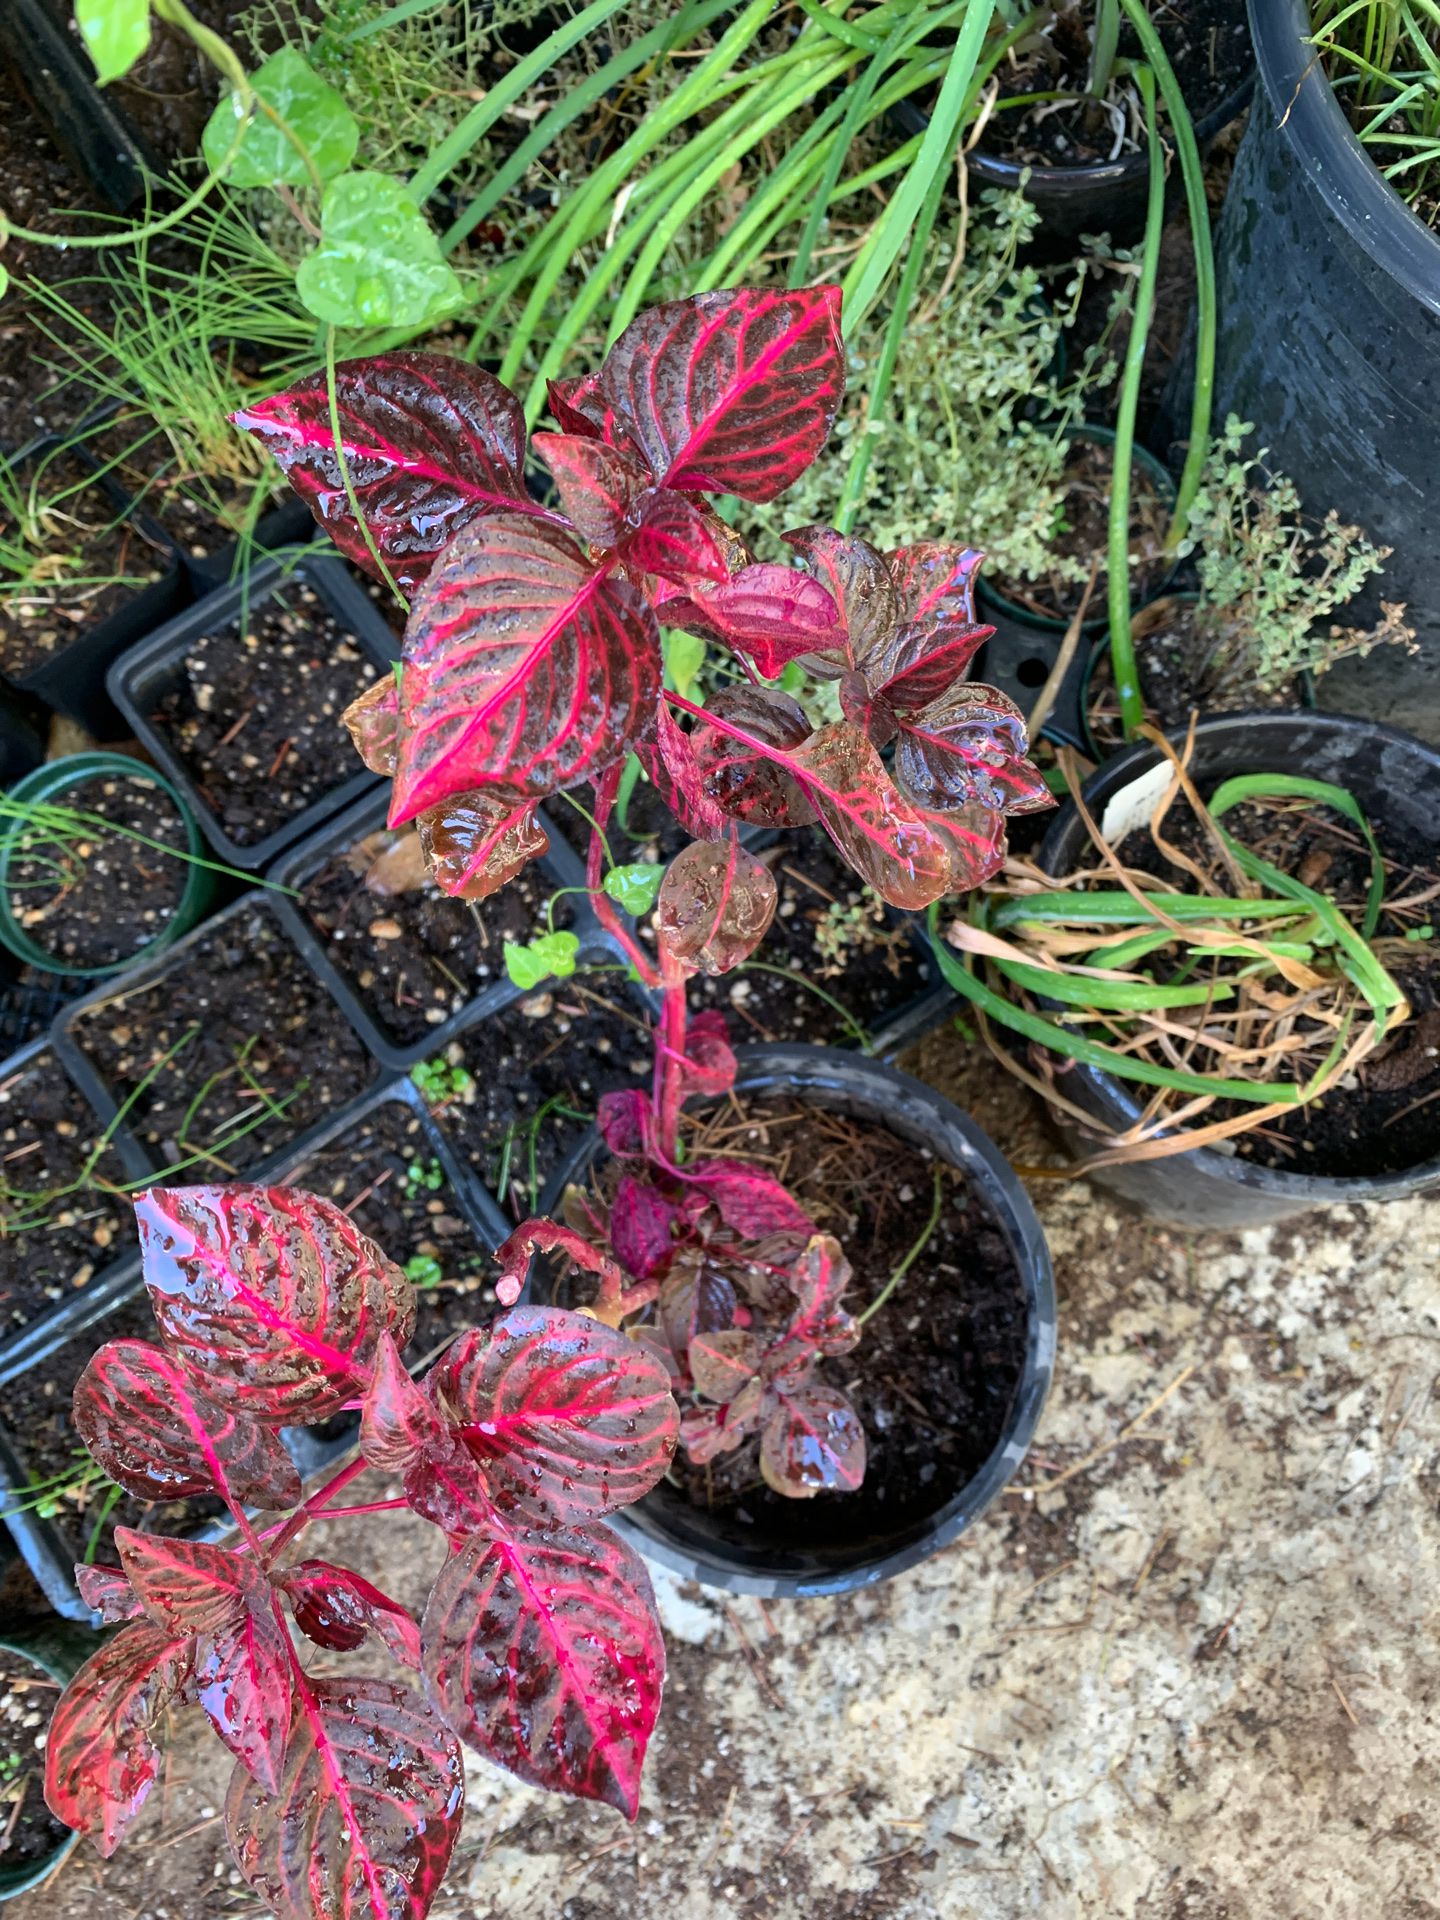 Red iresine plant